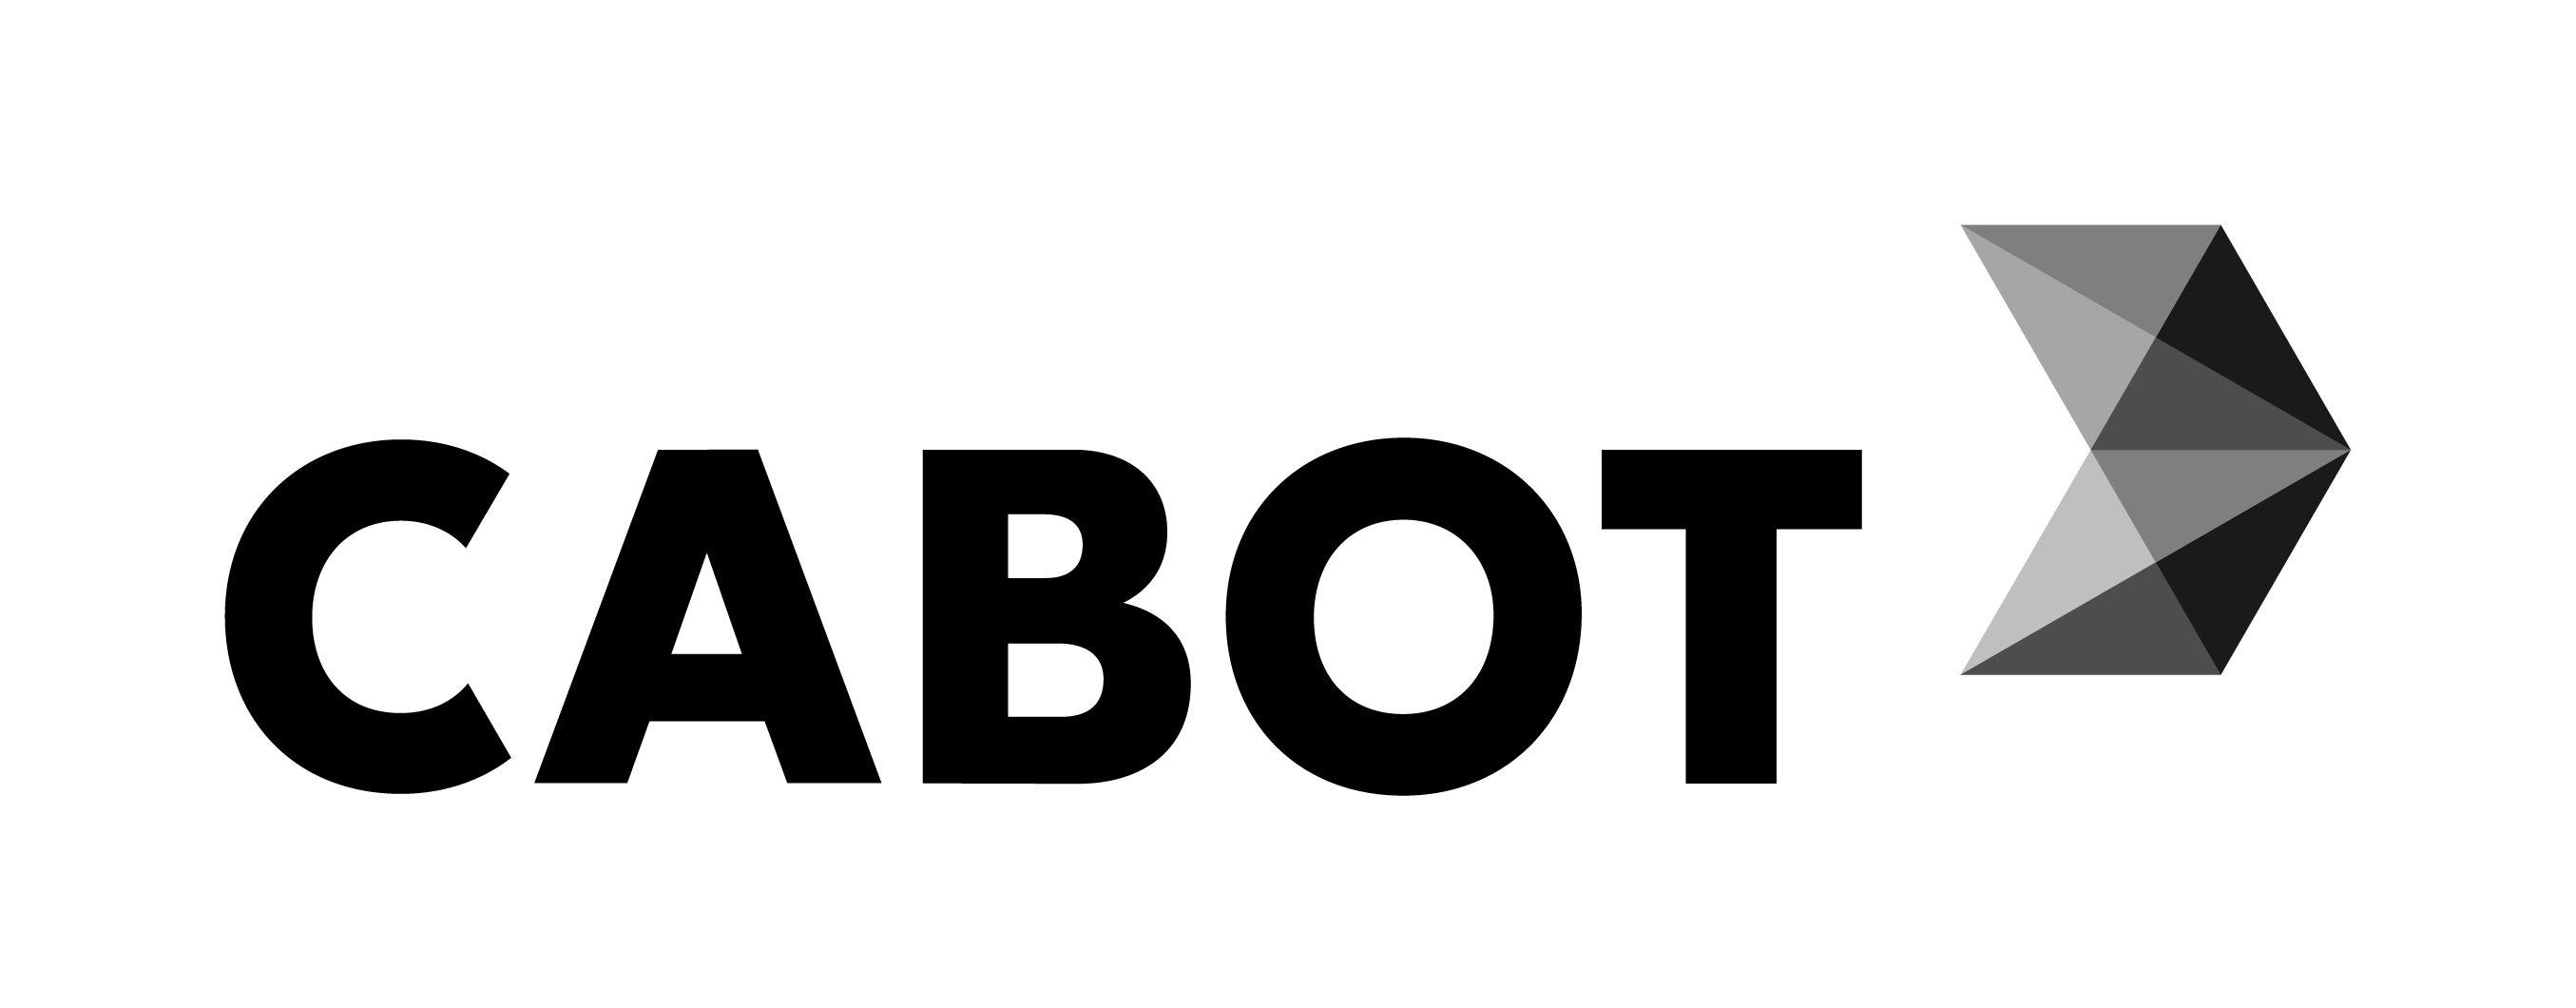 Cabot Logo - Press Kits | Cabot Corporation